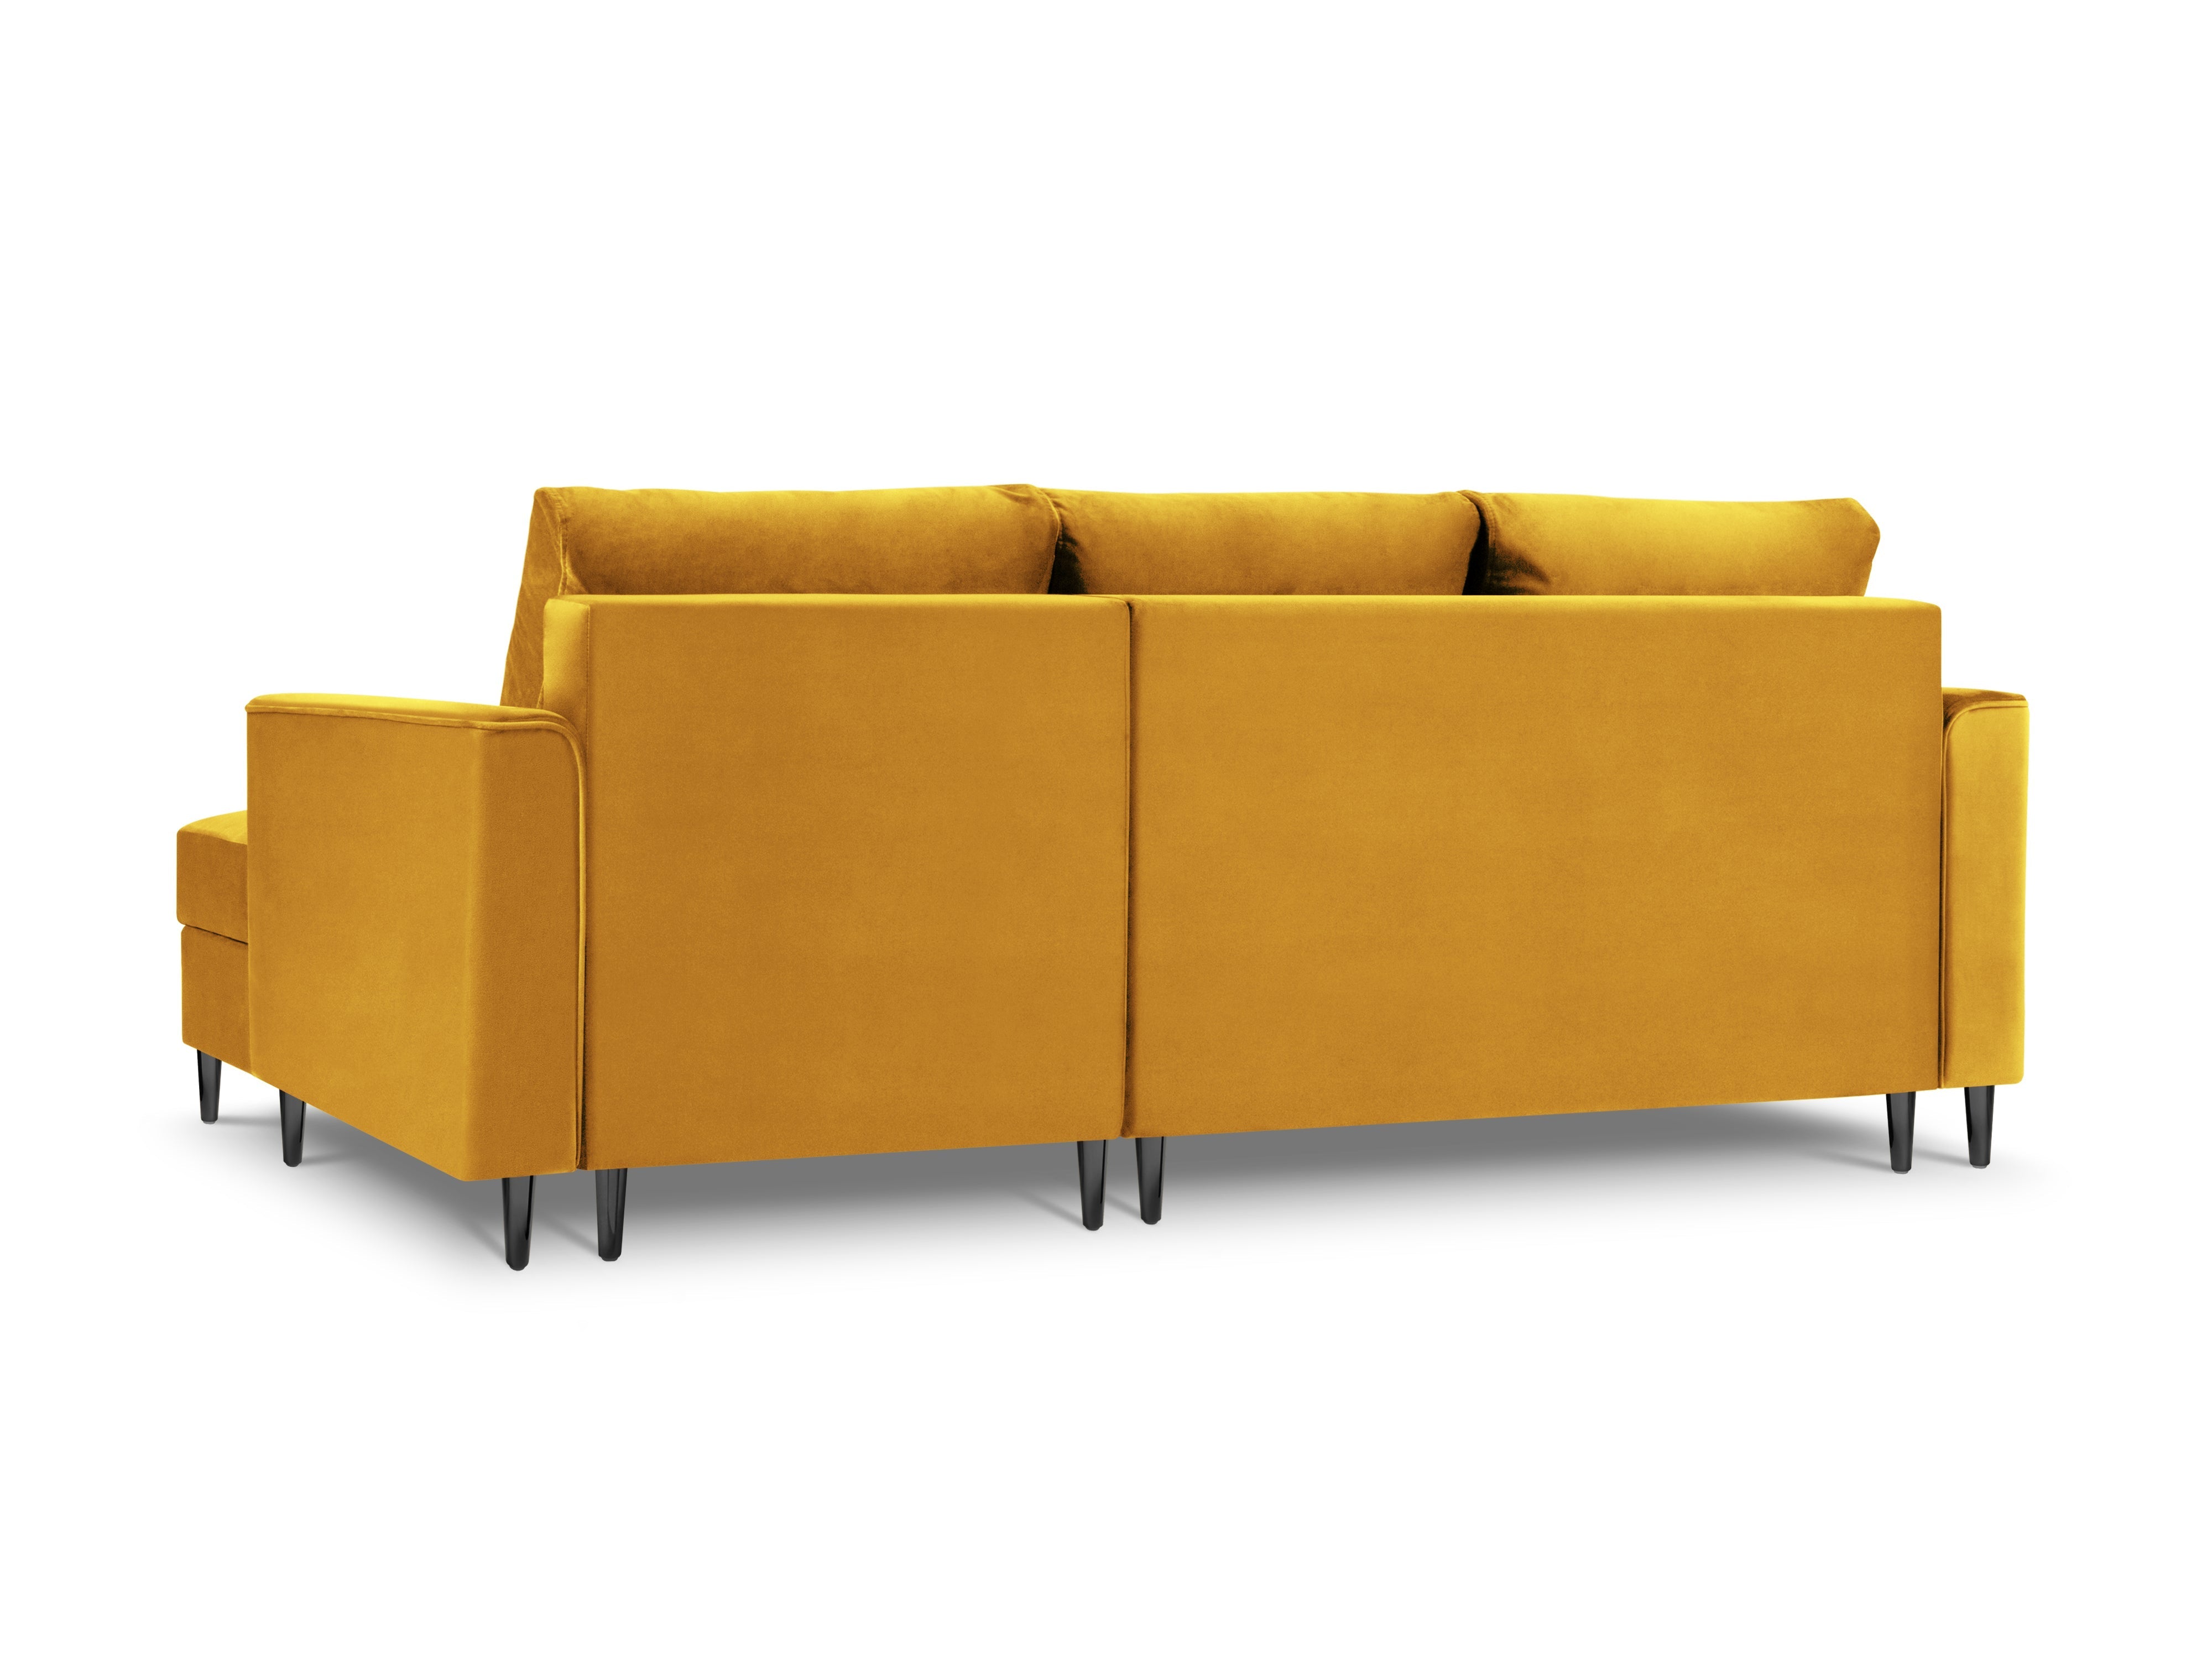 Velvet yellow corner with armrests